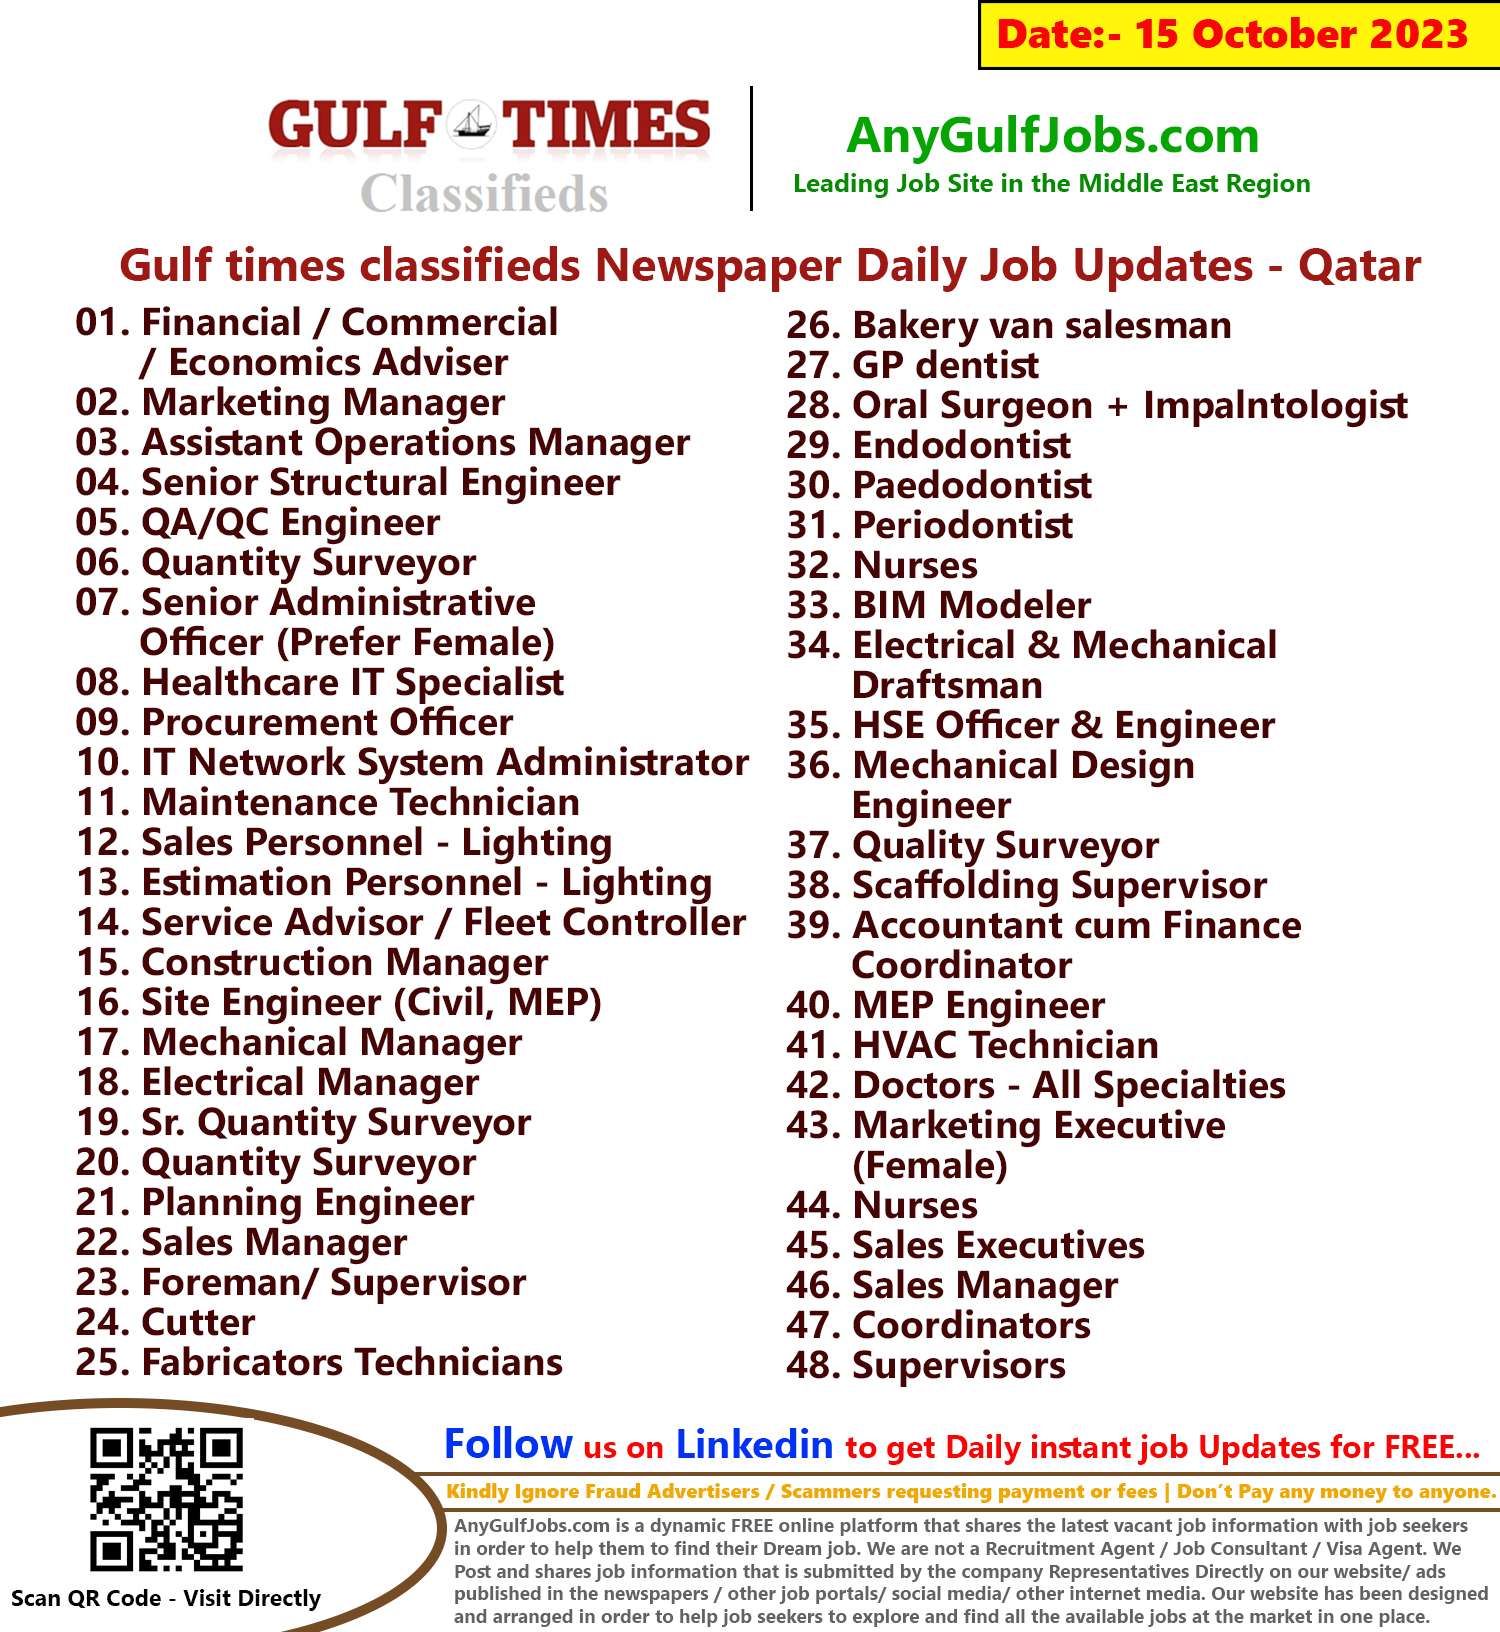 Gulf times classifieds Job Vacancies Qatar - 15 October 2023